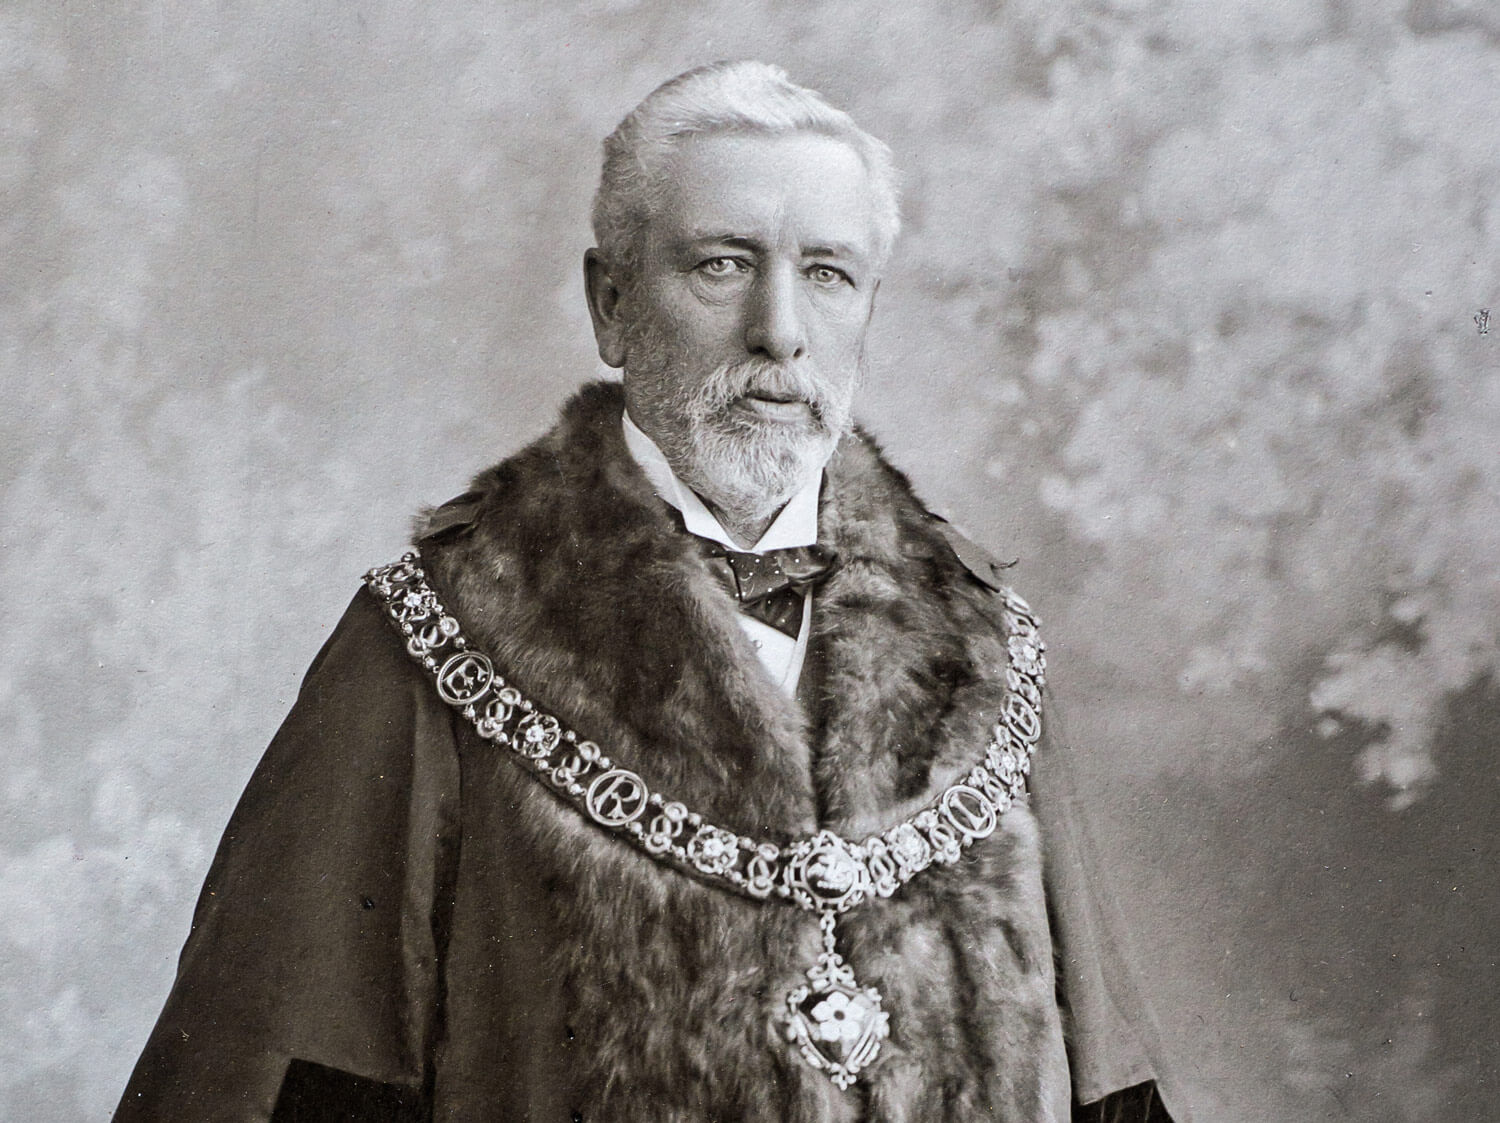 Edward Wood as Mayor in 1888 -